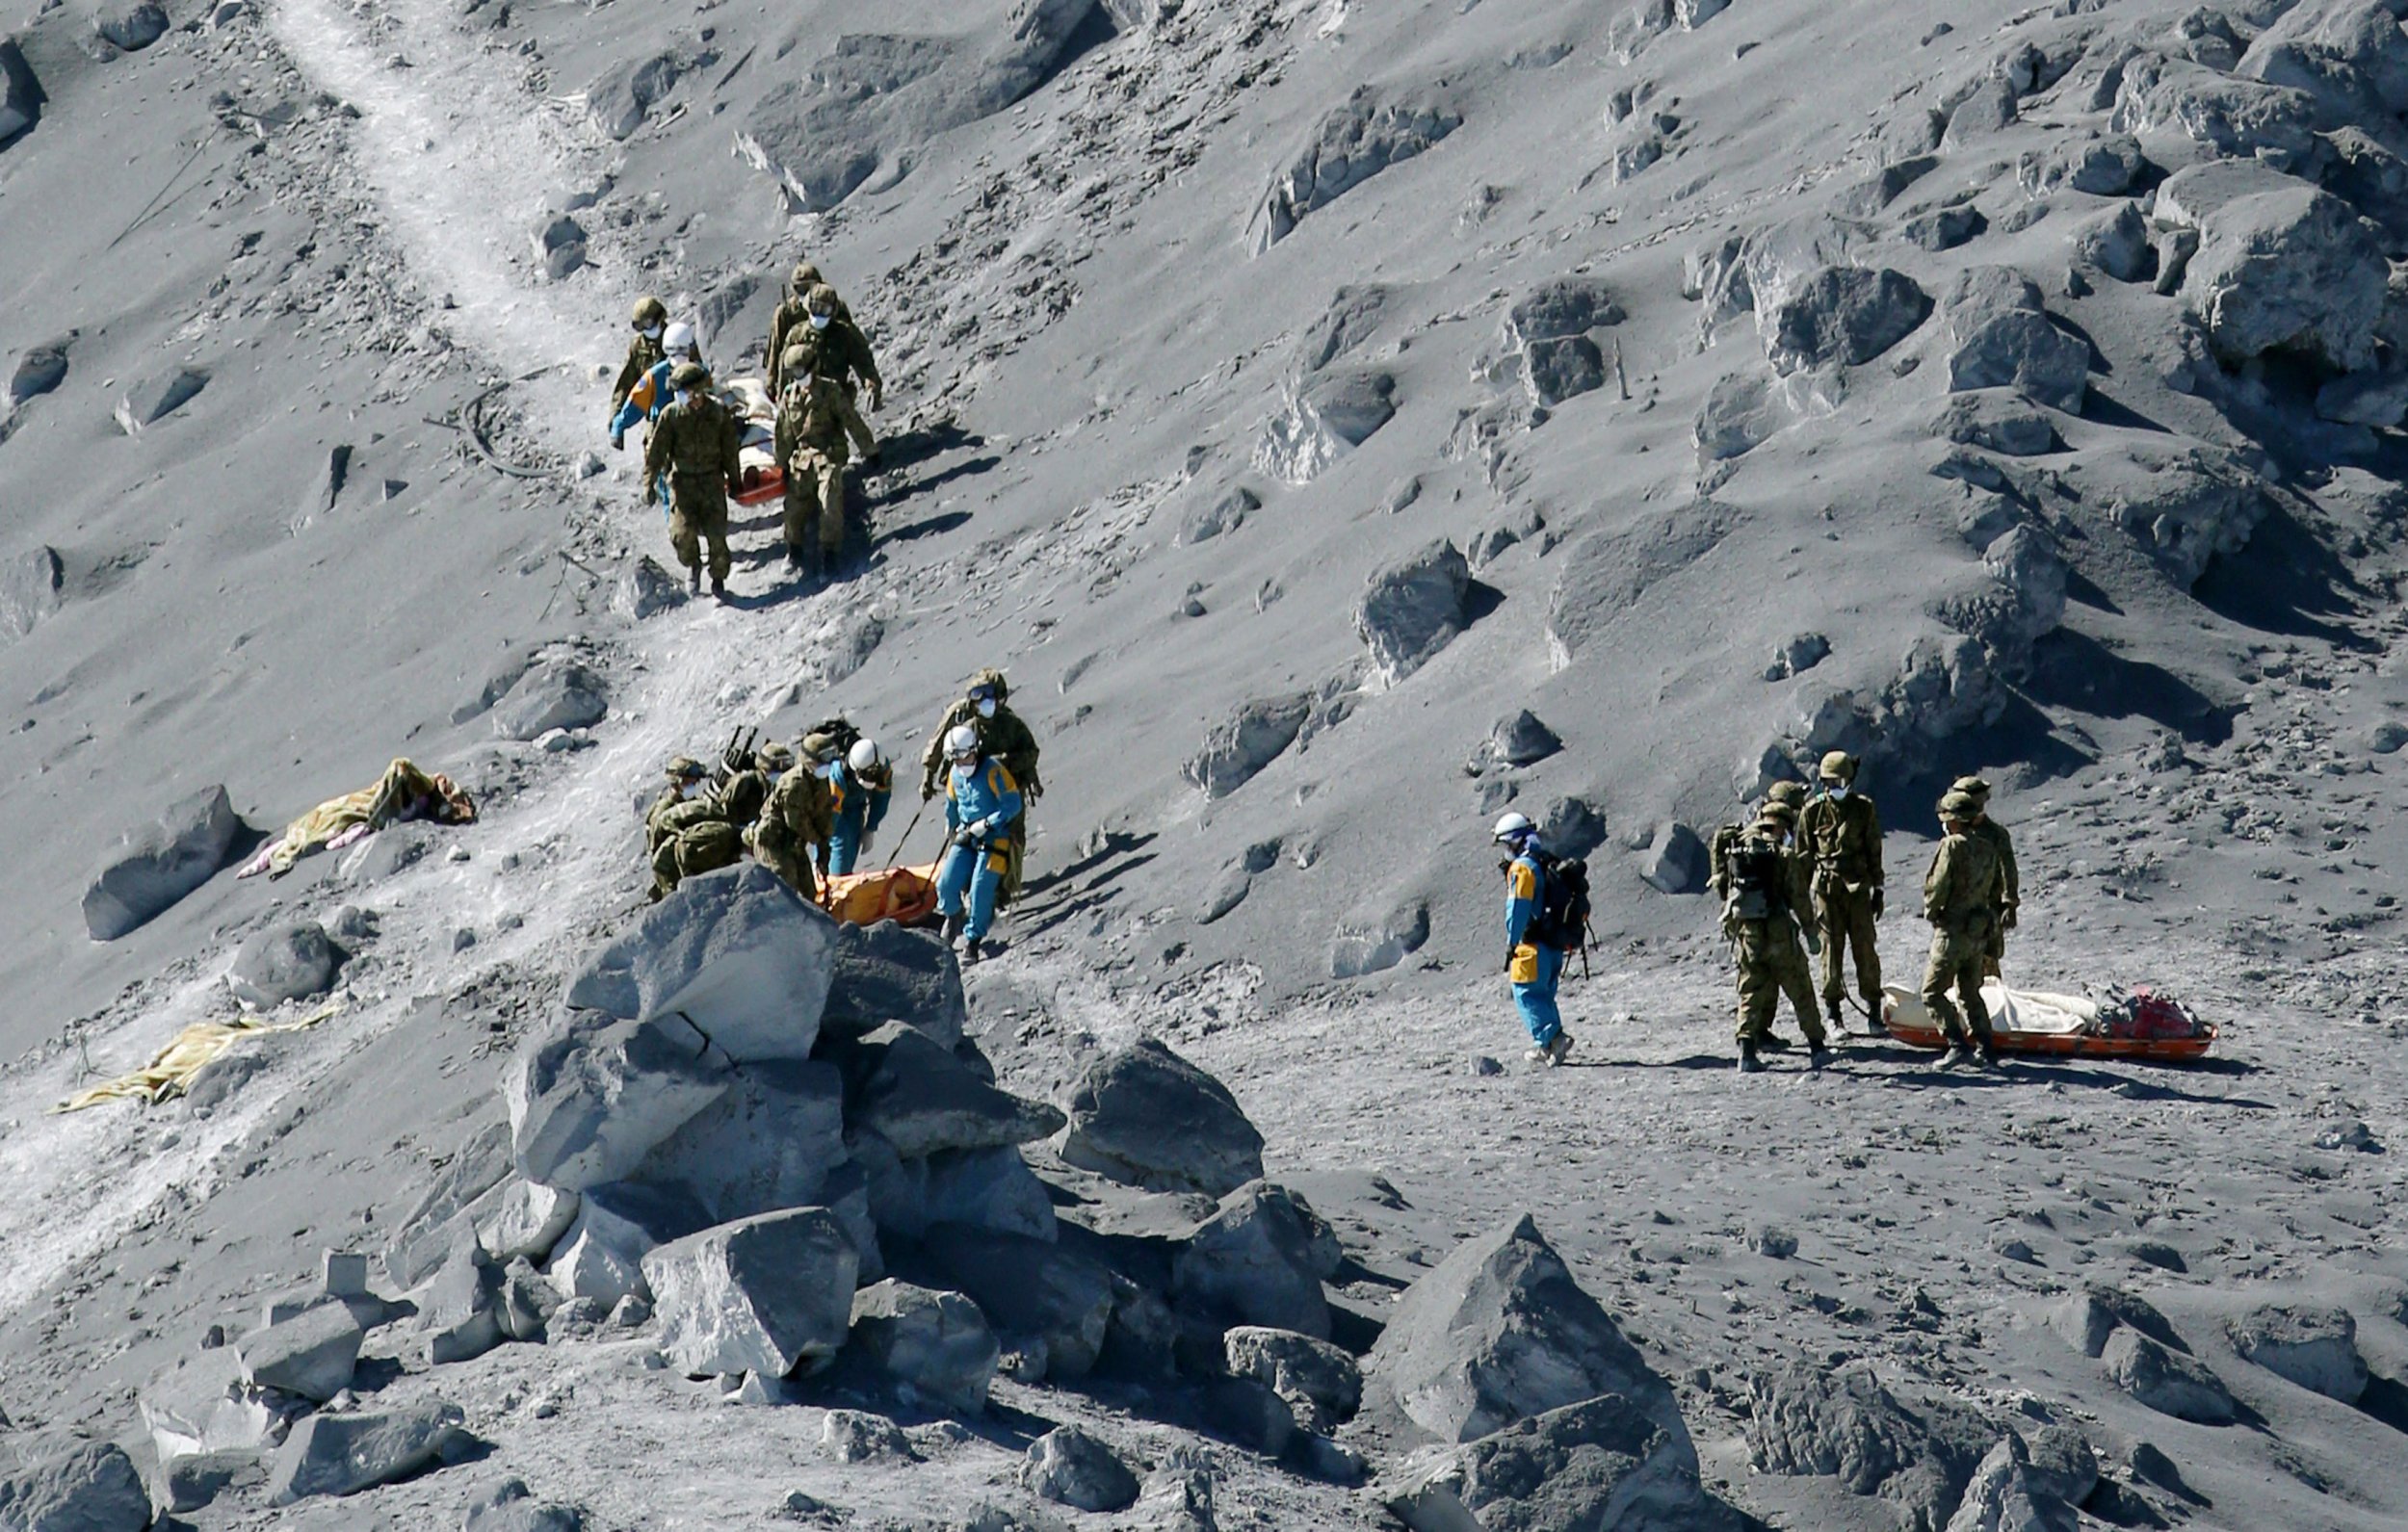 Mount Ontake Rescue Efforts